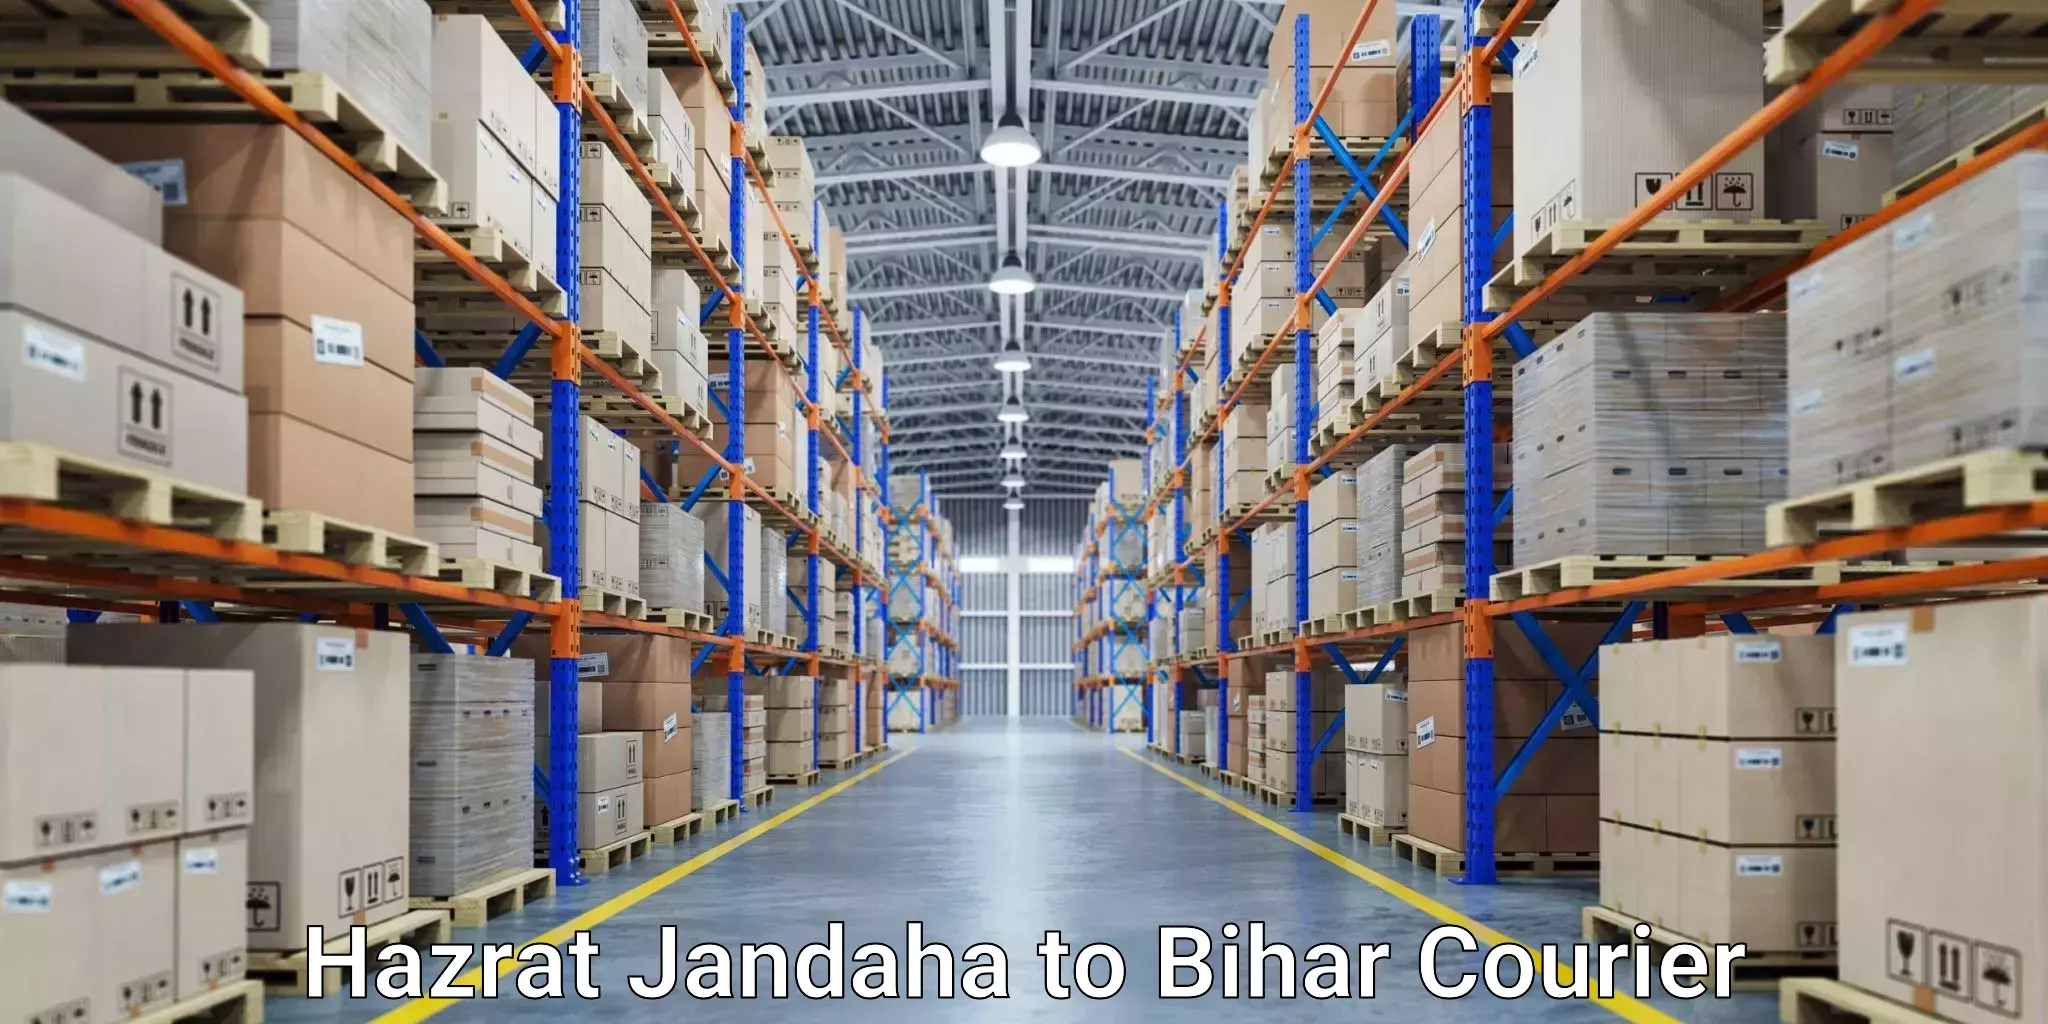 Small business couriers Hazrat Jandaha to Bihar